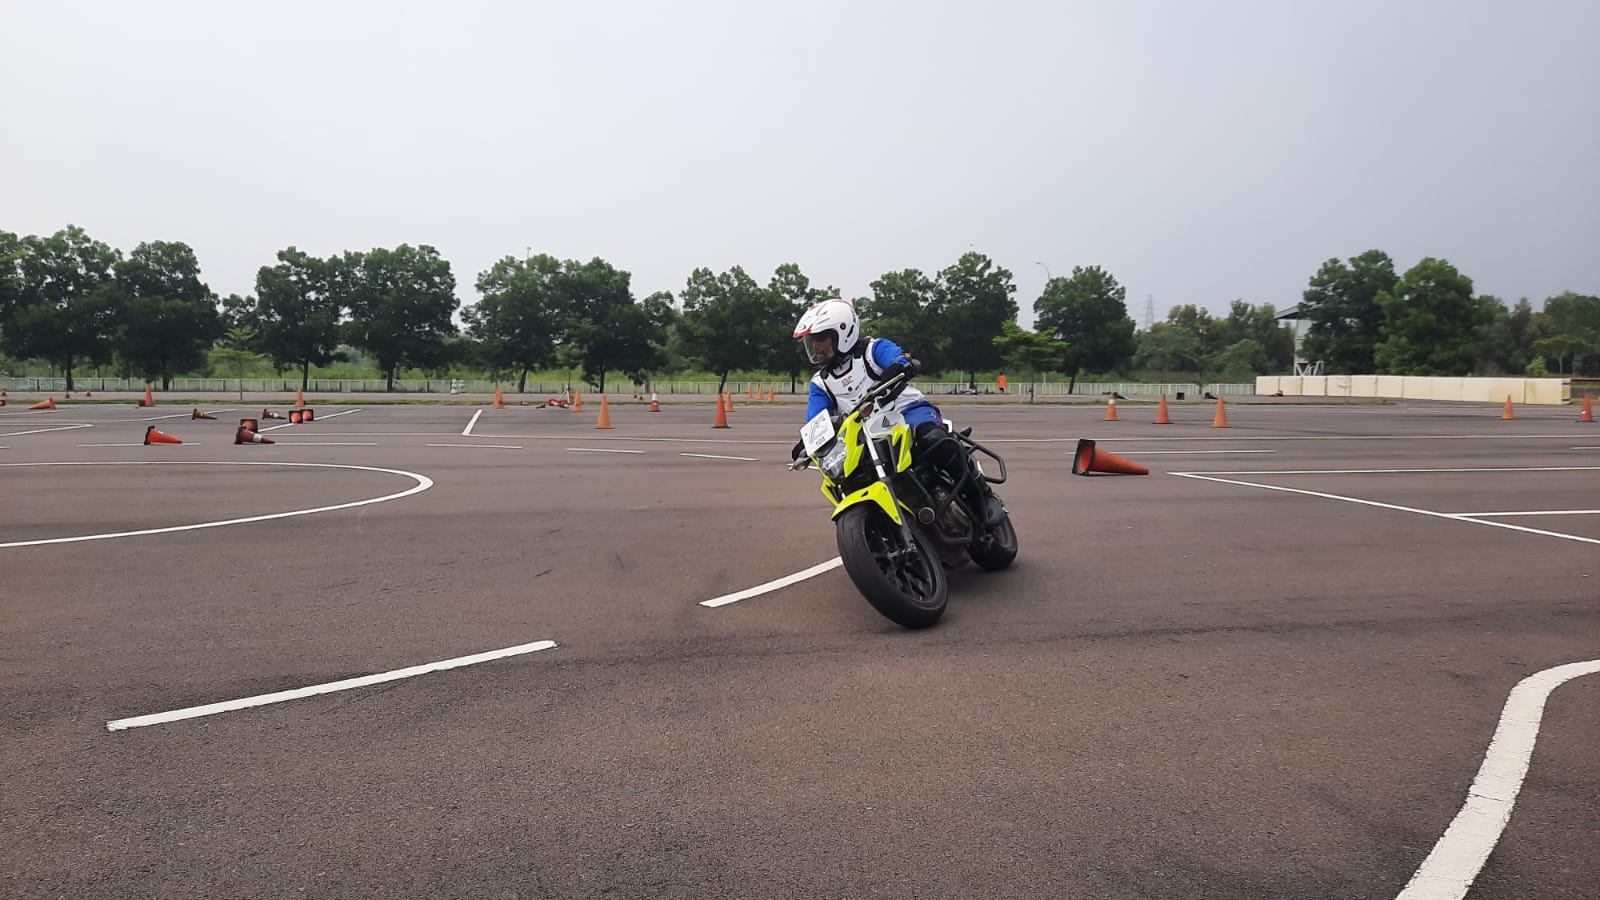 Instruktur Safety Riding MPM Honda Jatim Siap Unjuk Gigi di Kompetisi Internasional